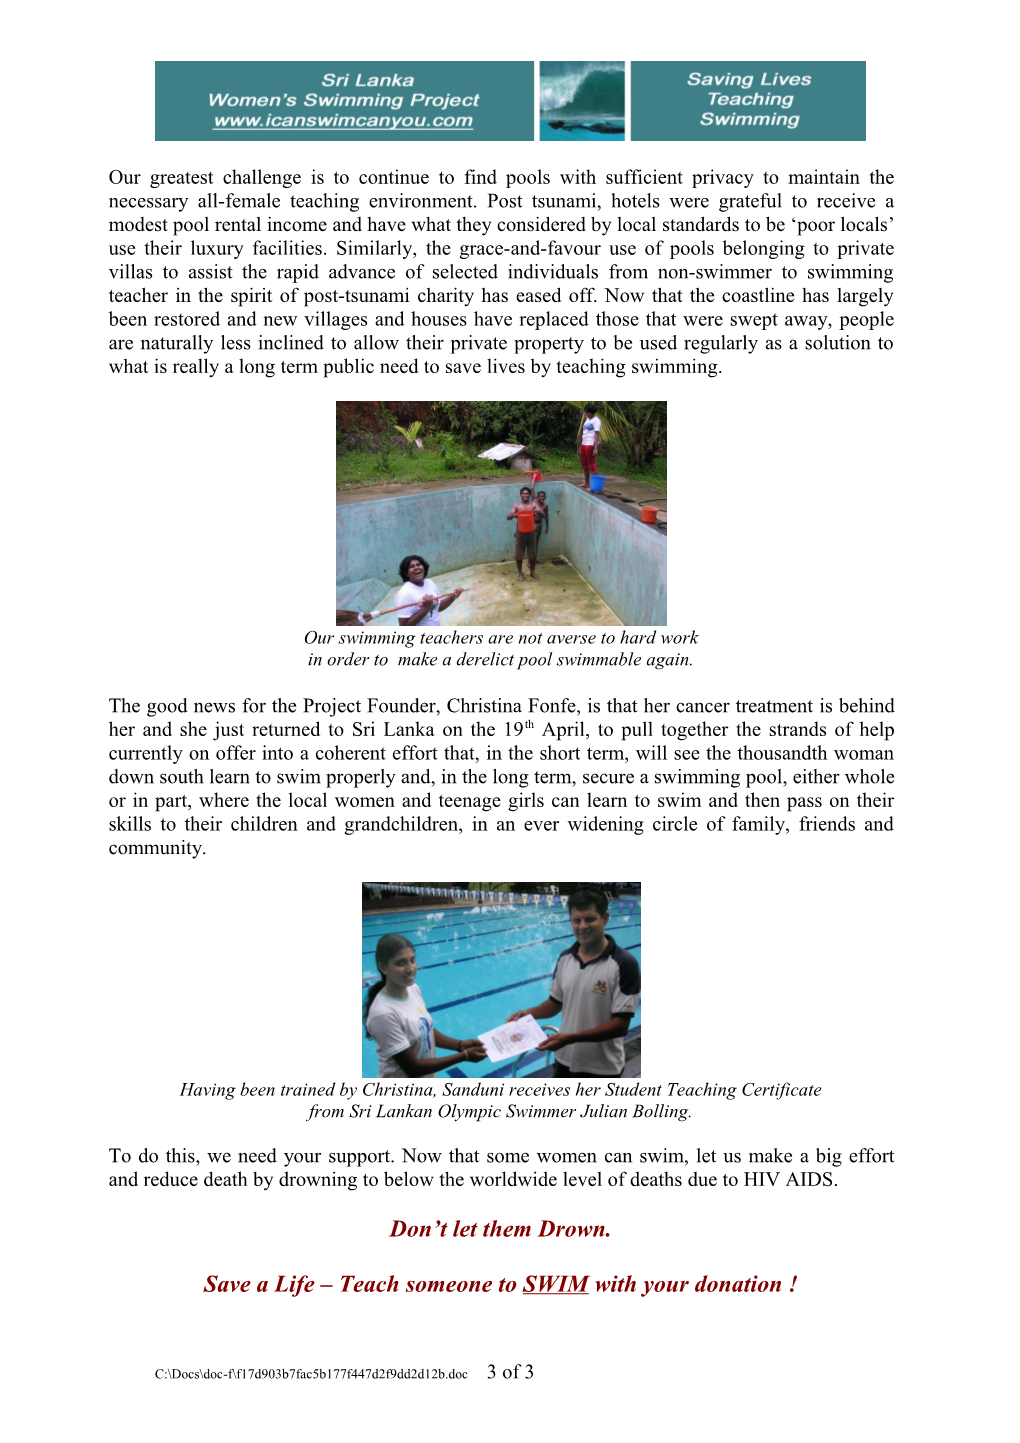 April 2008 Update on Sri Lanka Women S Swimming Project by Christina Fonfe